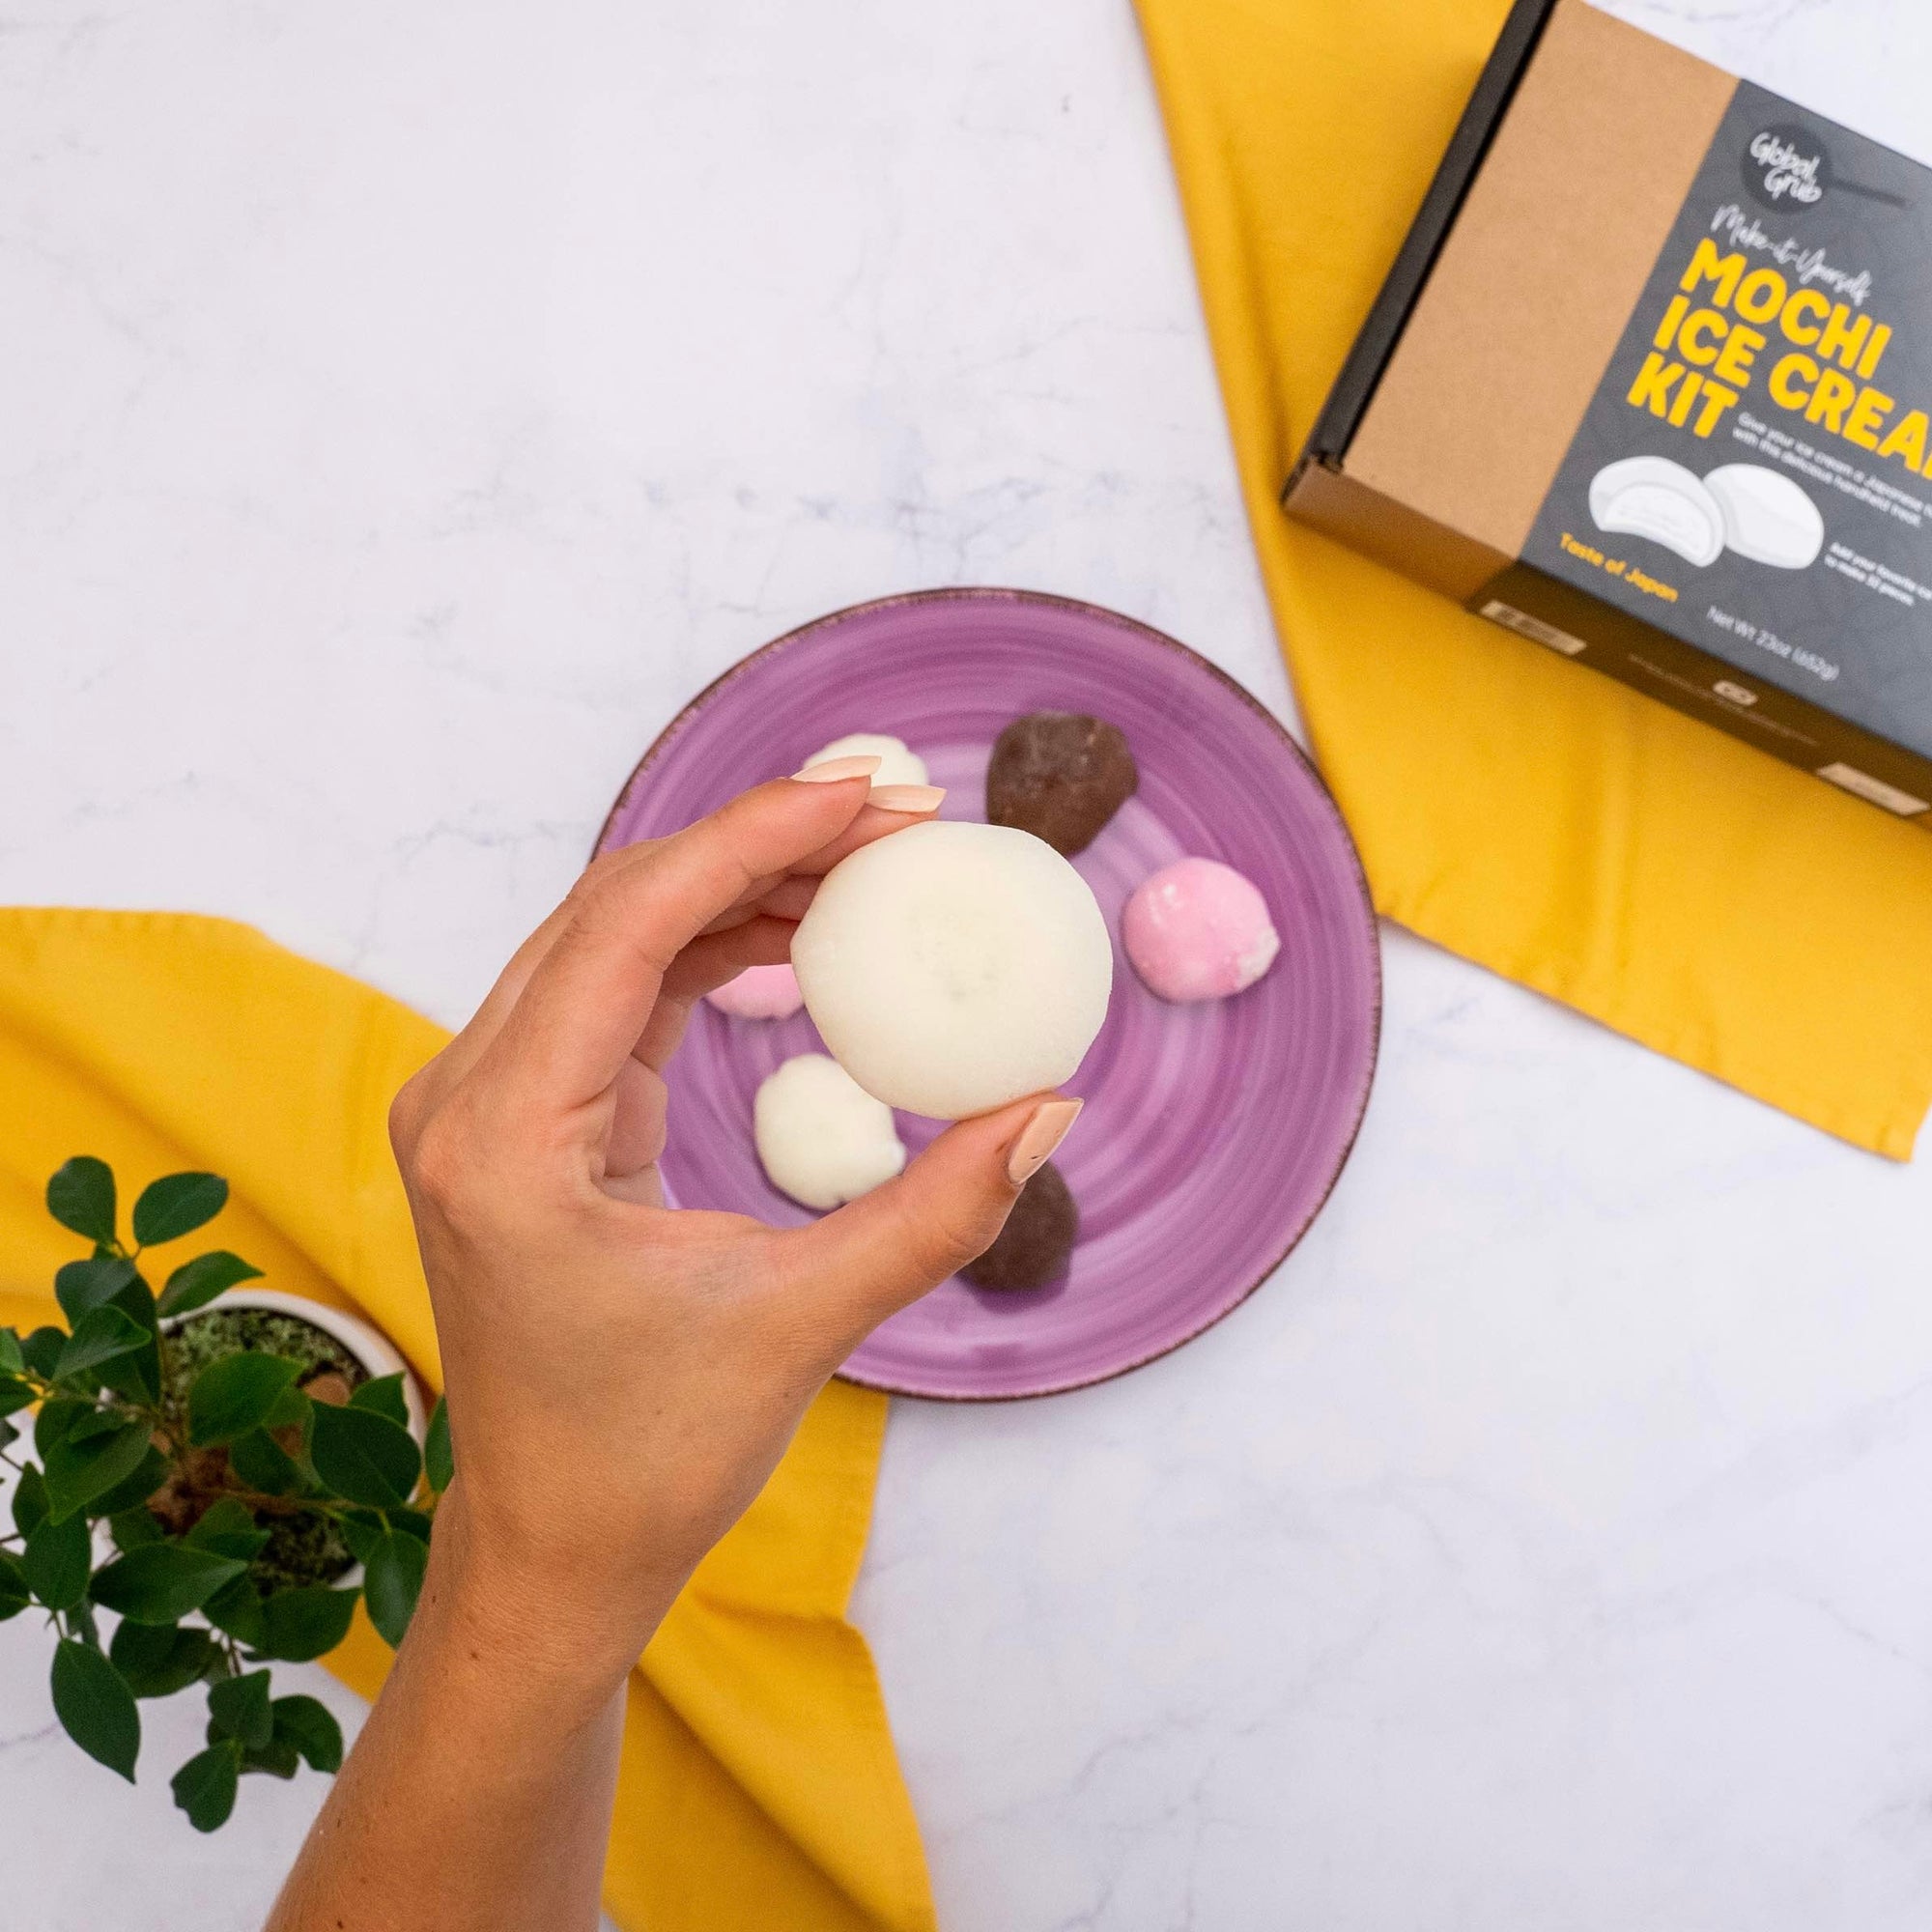 Global Grub DIY Mochi Ice Cream Kit - Mochi Kit Includes Sweet Rice Flour,  Potato Starch, Matcha Powder, Cocoa Powder, Ice Cream Mochi Maker, Dough  Cutter, Cooking Instructions. Makes 32 Pieces.